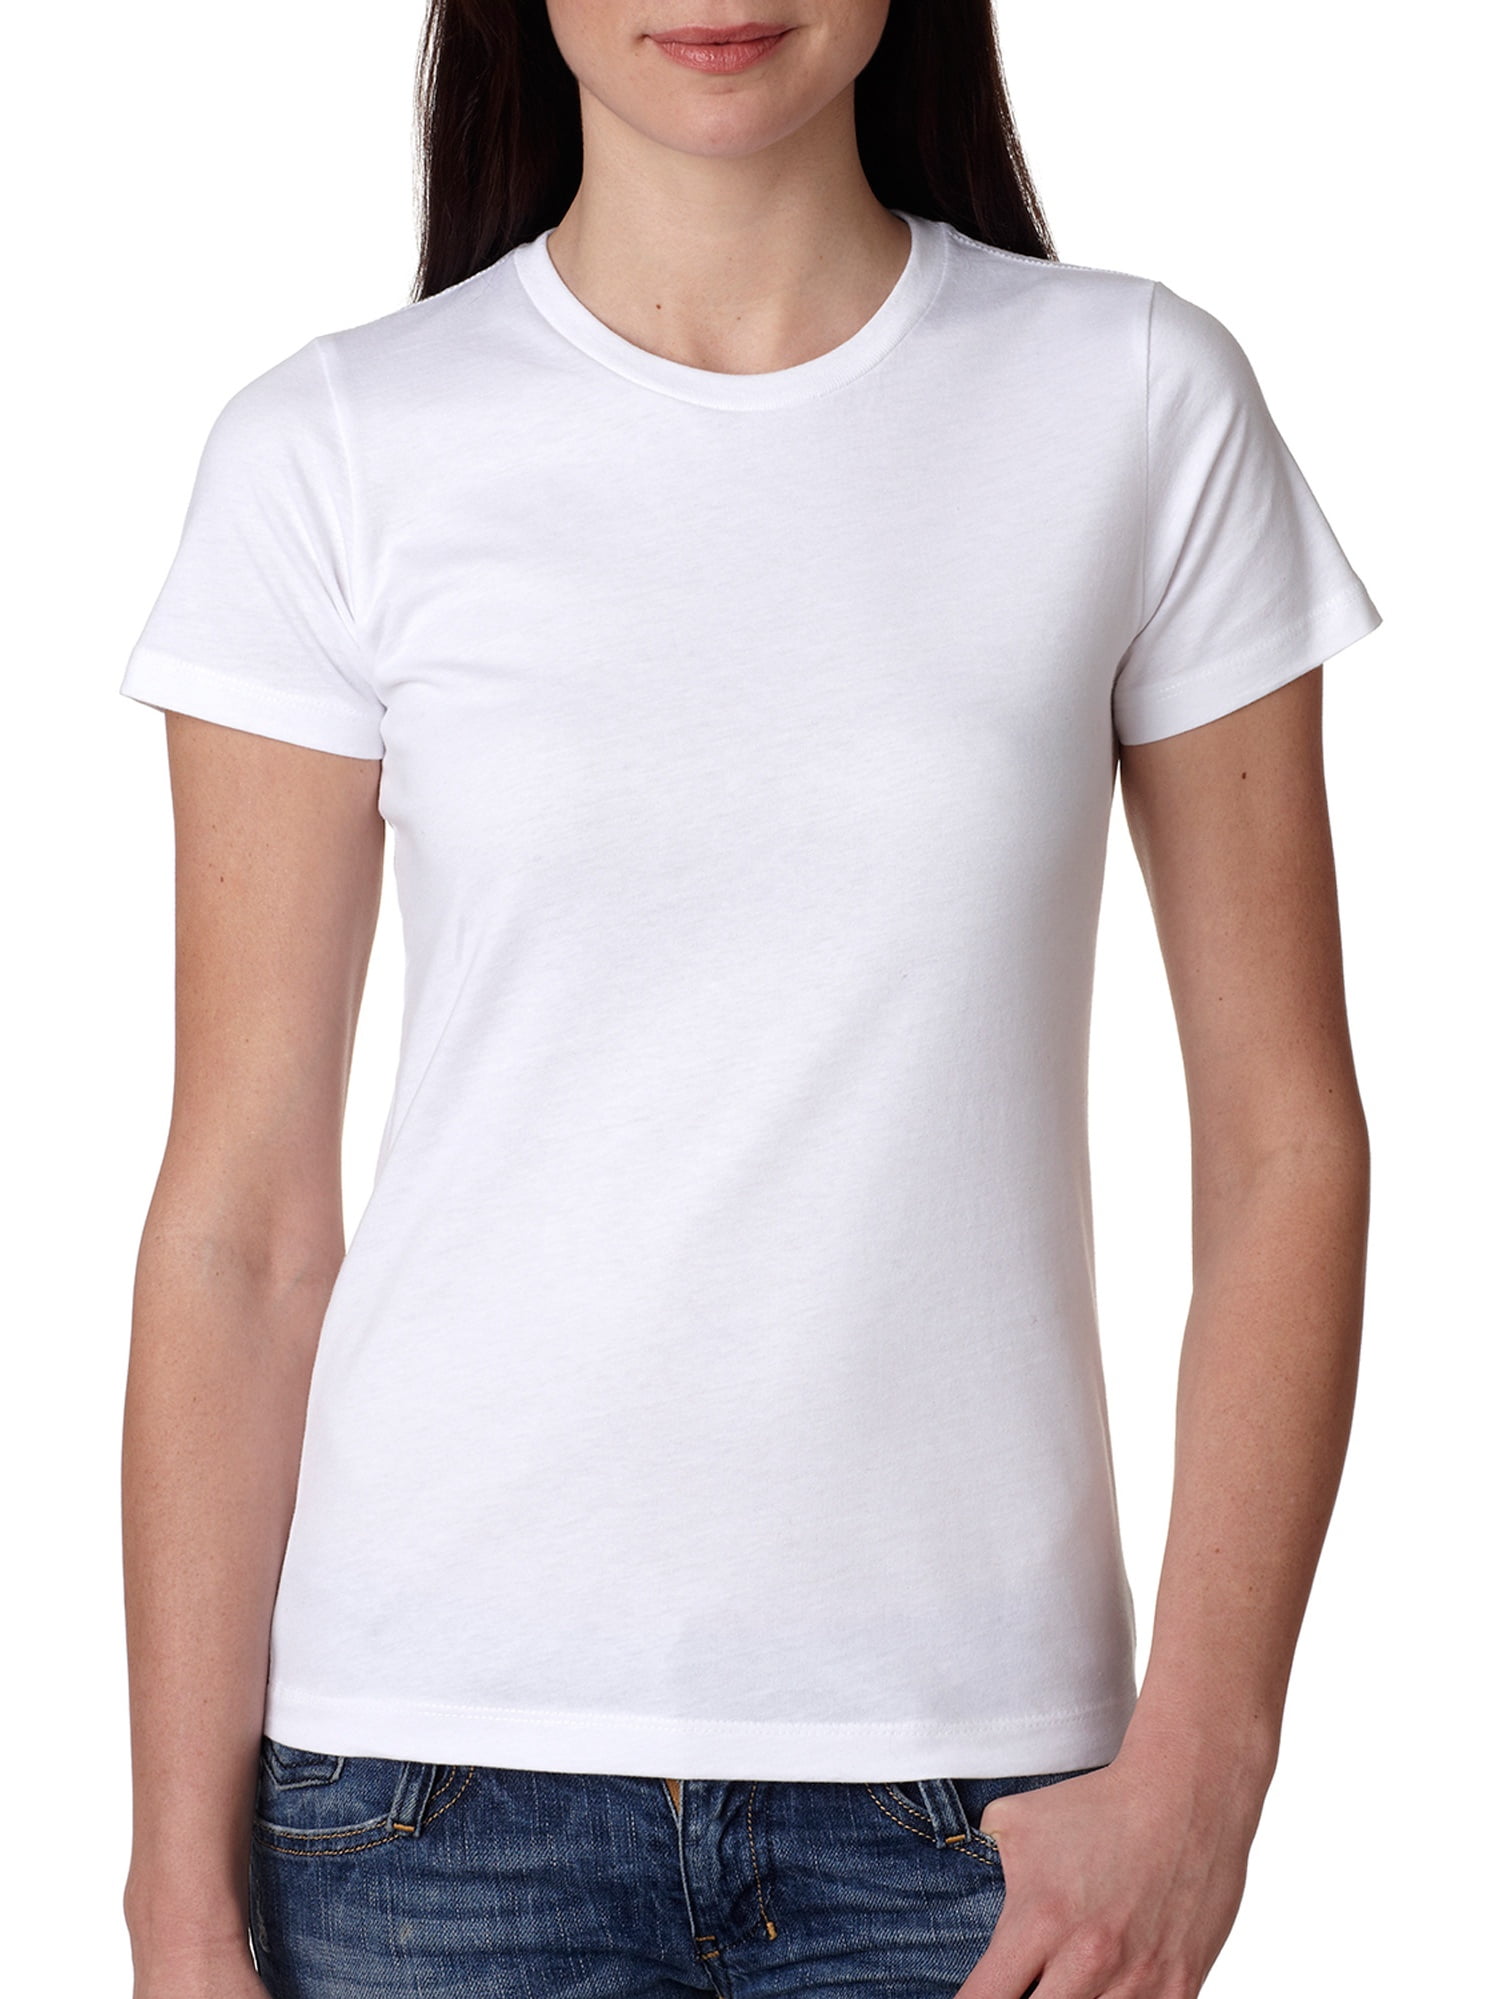 Next Level Apparel Womens Tear Away Label T-Shirt, White, 3XL, Style ...